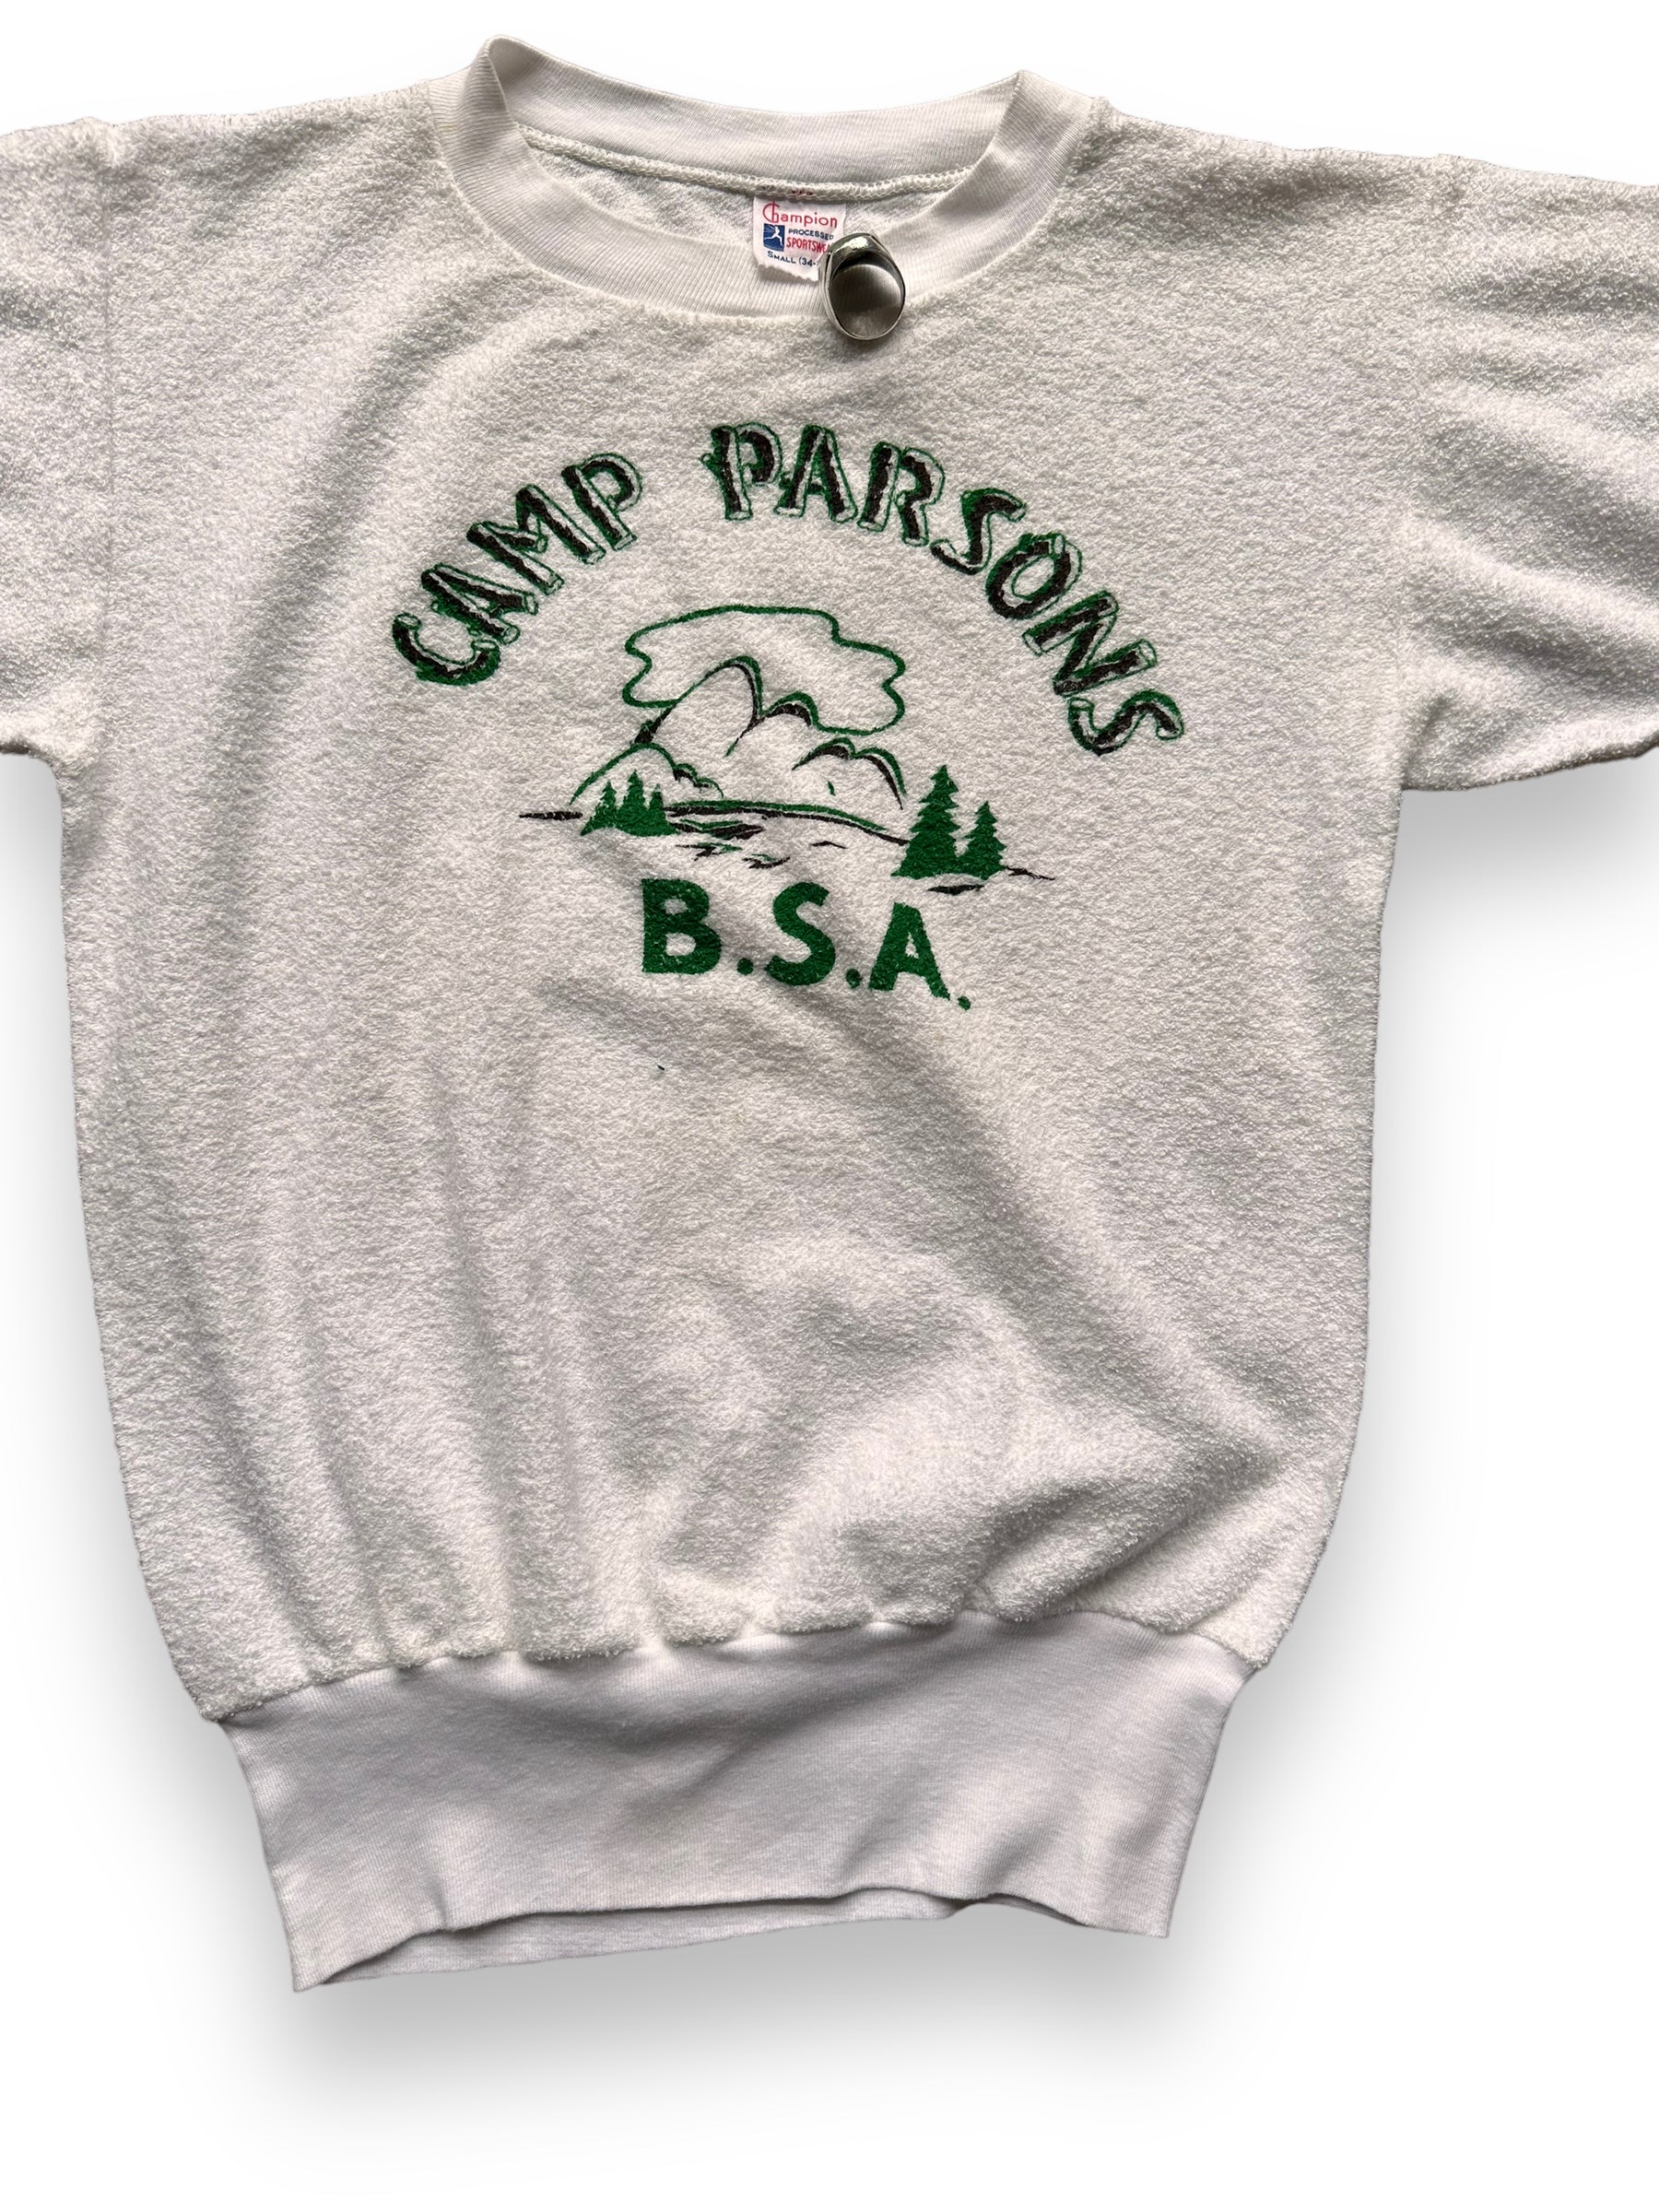 Front Detail of Vintage Champion Camp Parsons BSA Camp Terry Cloth Shirt SZ SM | Vintage Boy Scout Camp Shirt | Seattle Vintage Clothing